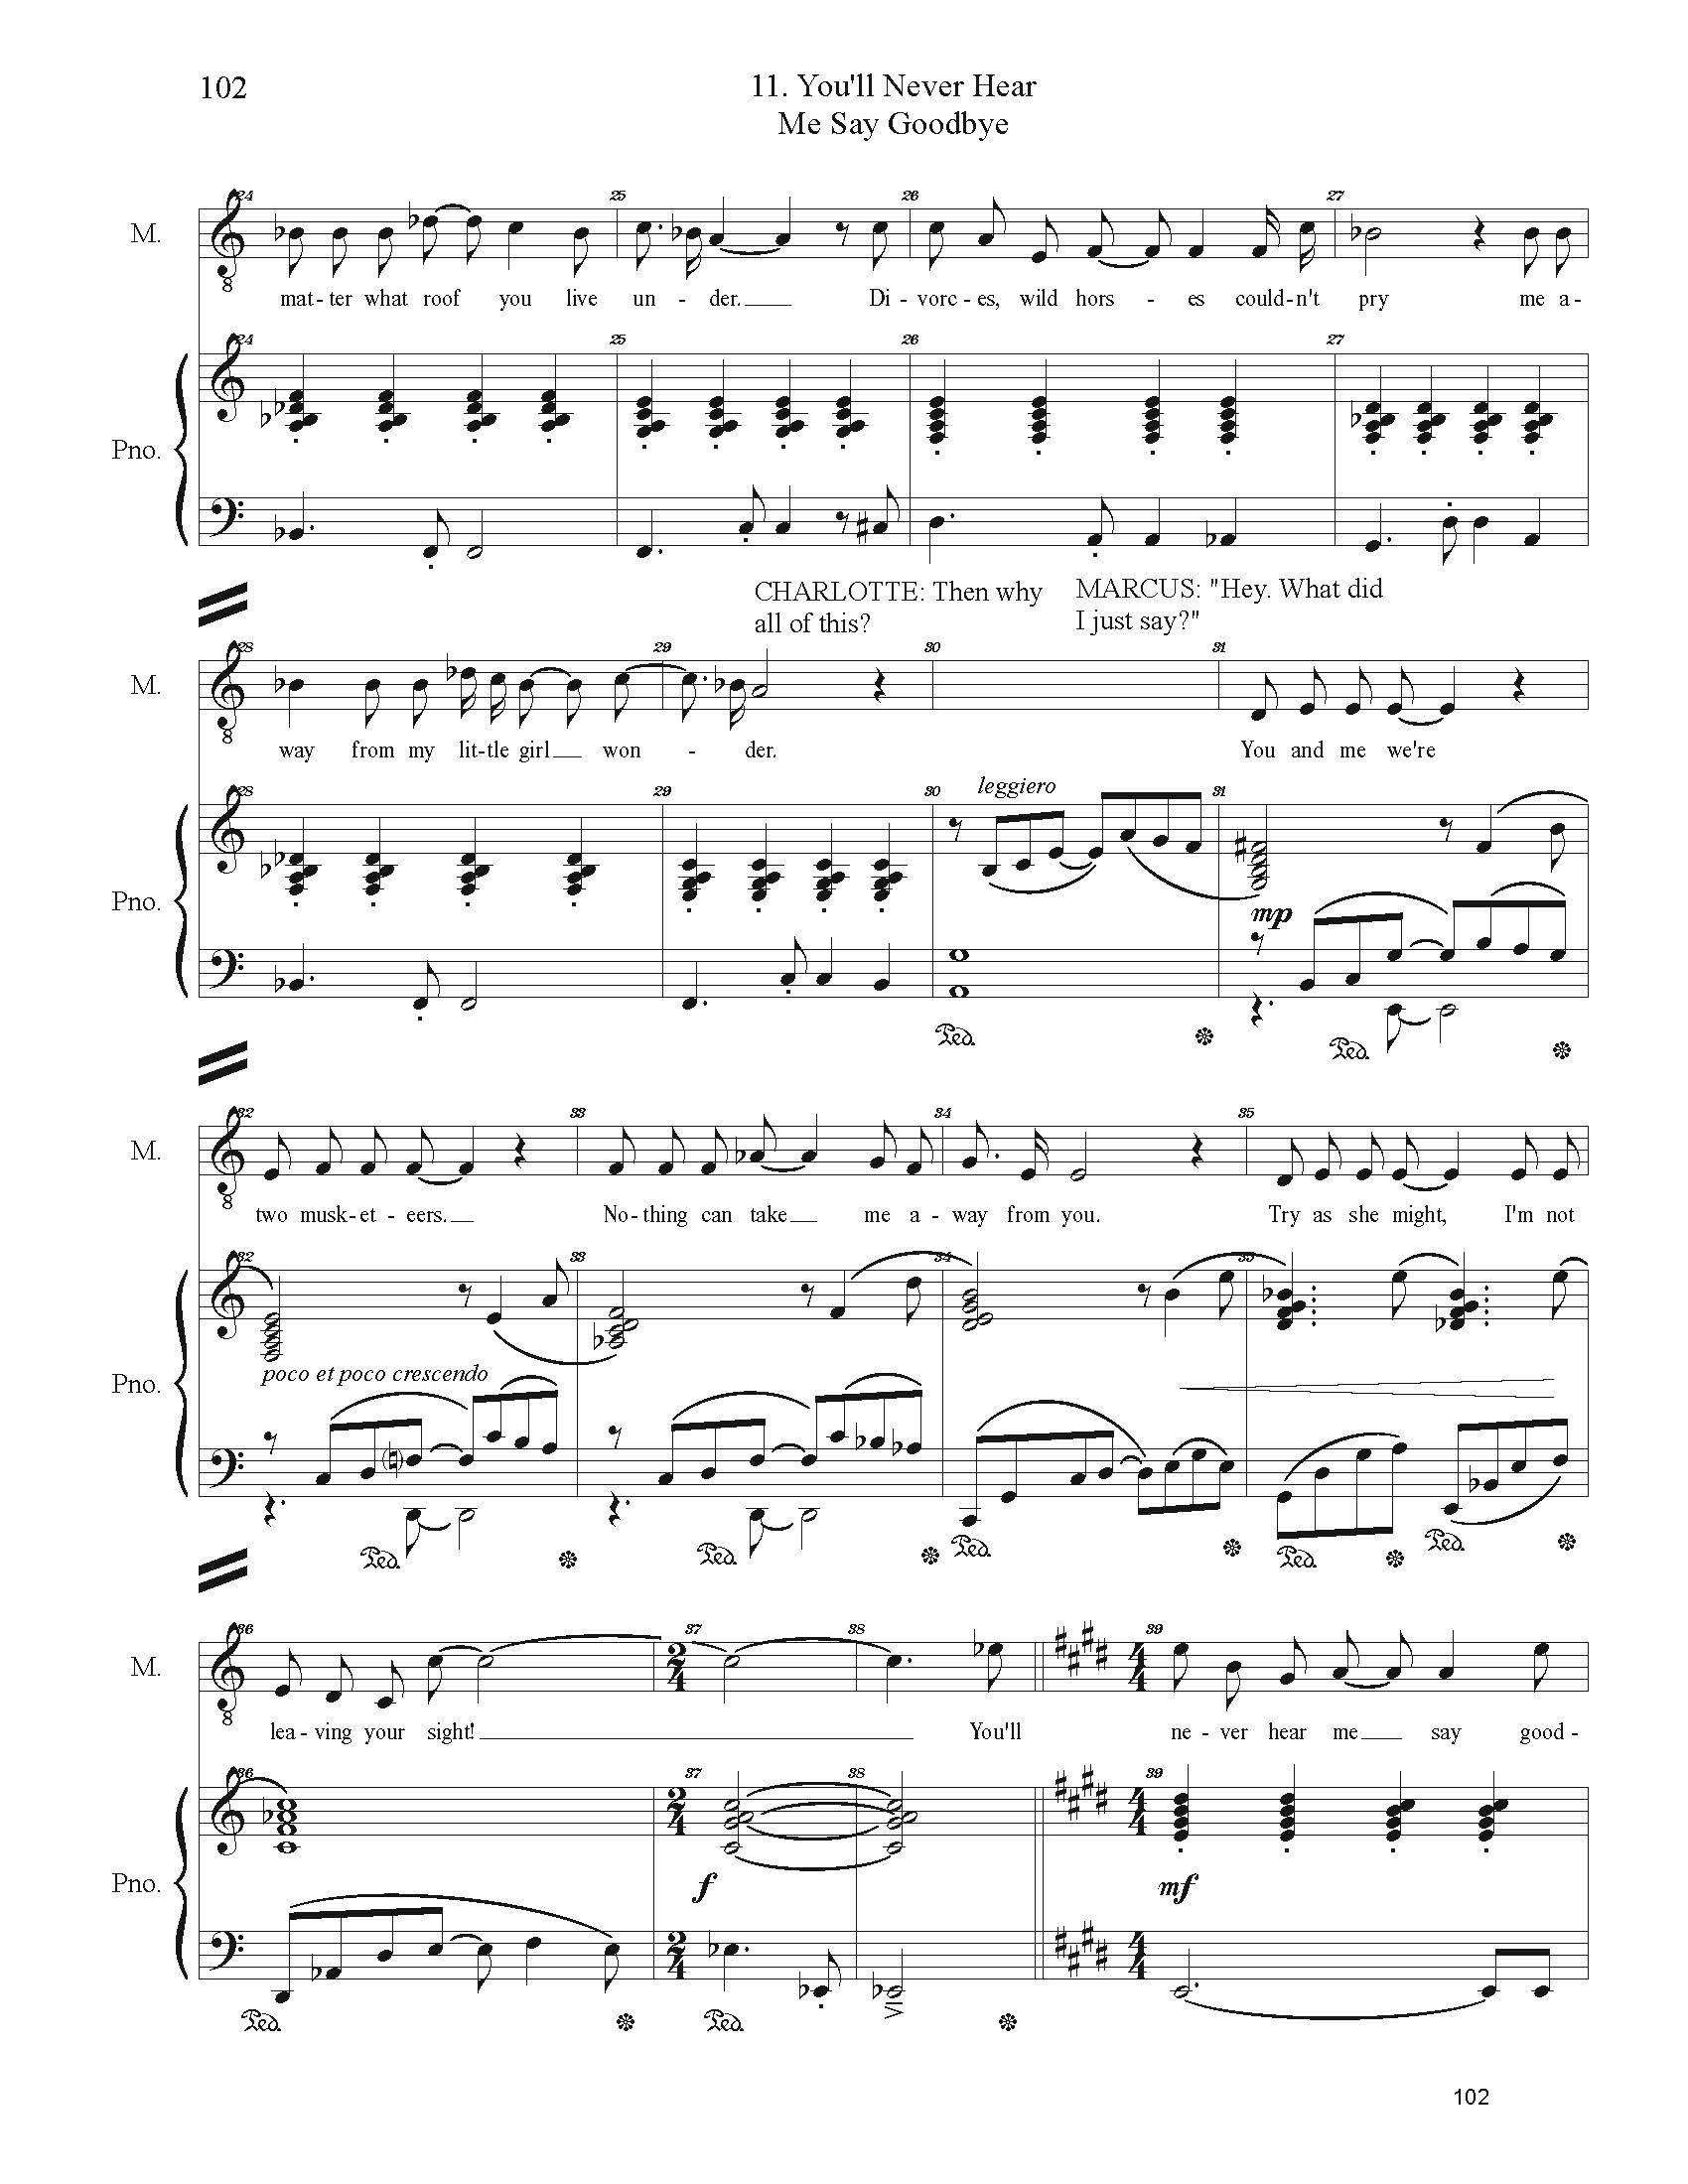 FULL PIANO VOCAL SCORE DRAFT 1 - Score_Page_102.jpg